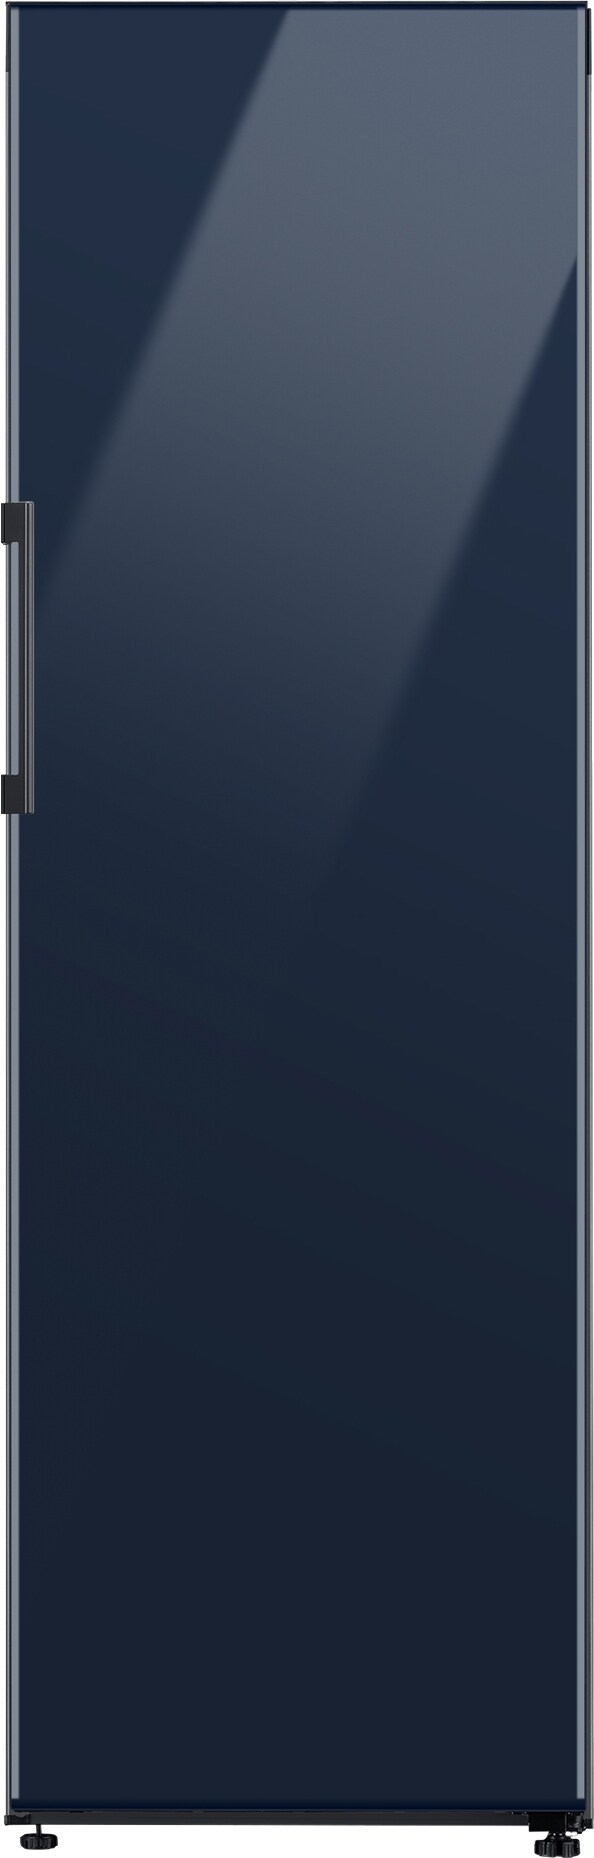 Samsung Bespoke køleskab RR39A746341/EE (glam navy) thumbnail